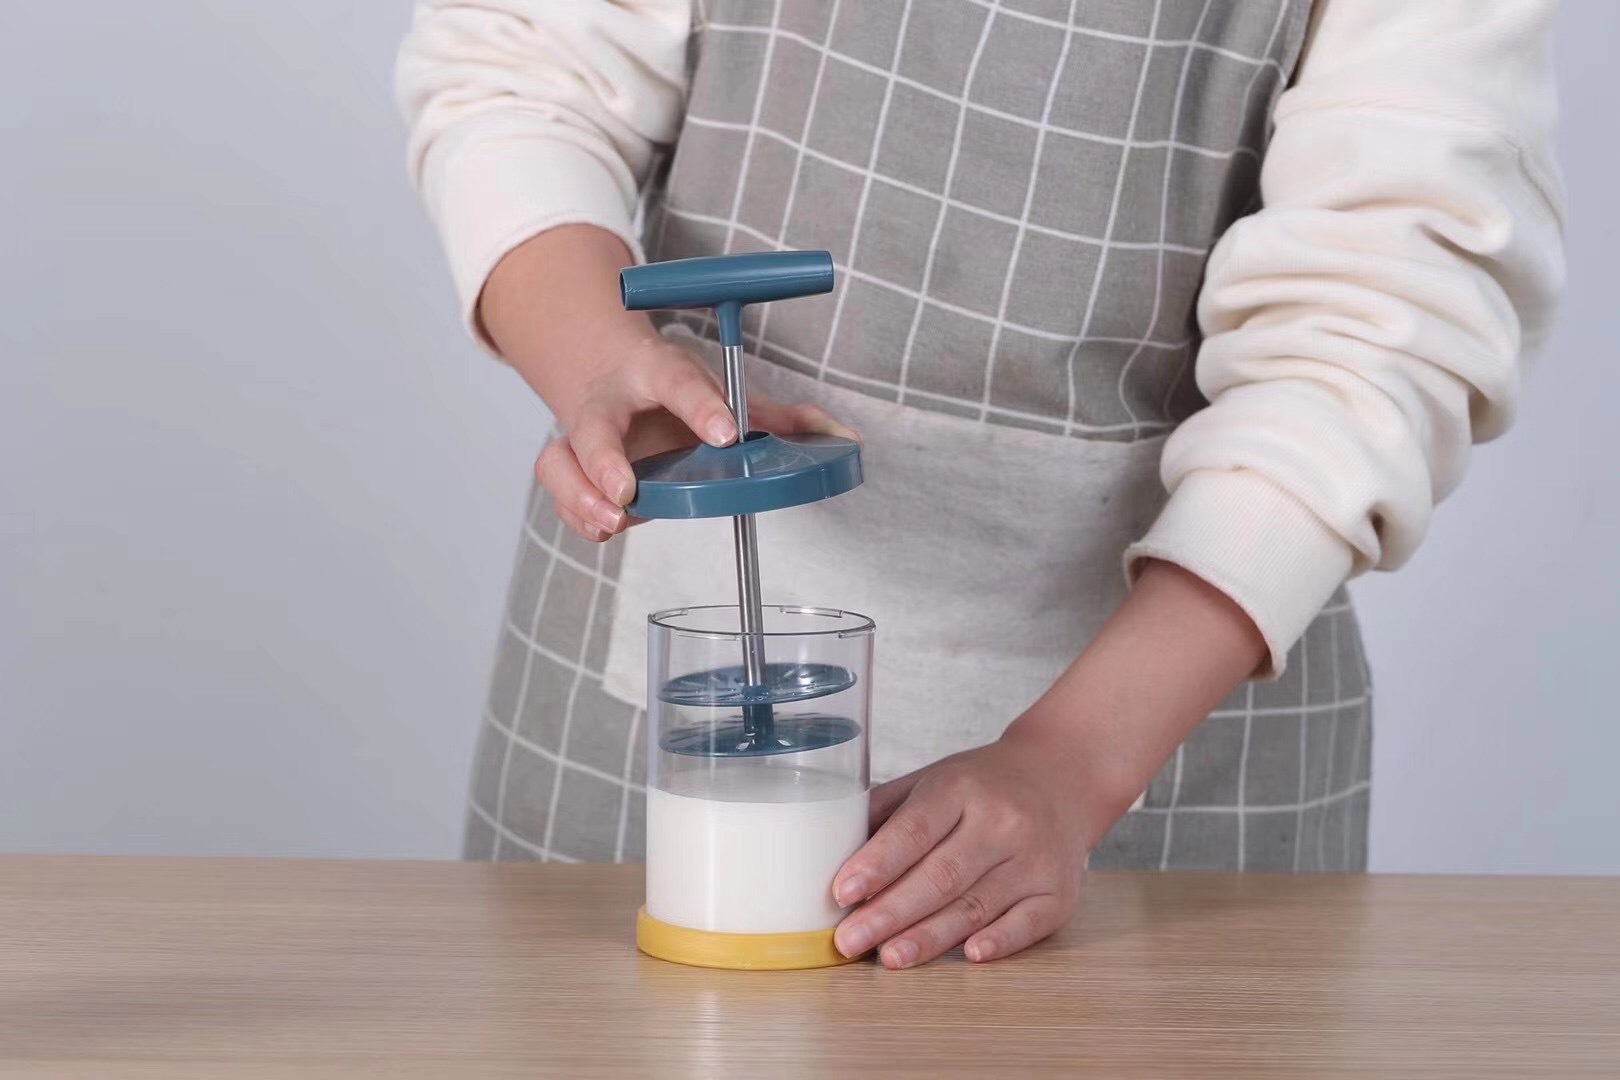 DIY Cake Cream Blender Baking Tools Creative Hands-on Household Hand-Held Egg Beating Cup